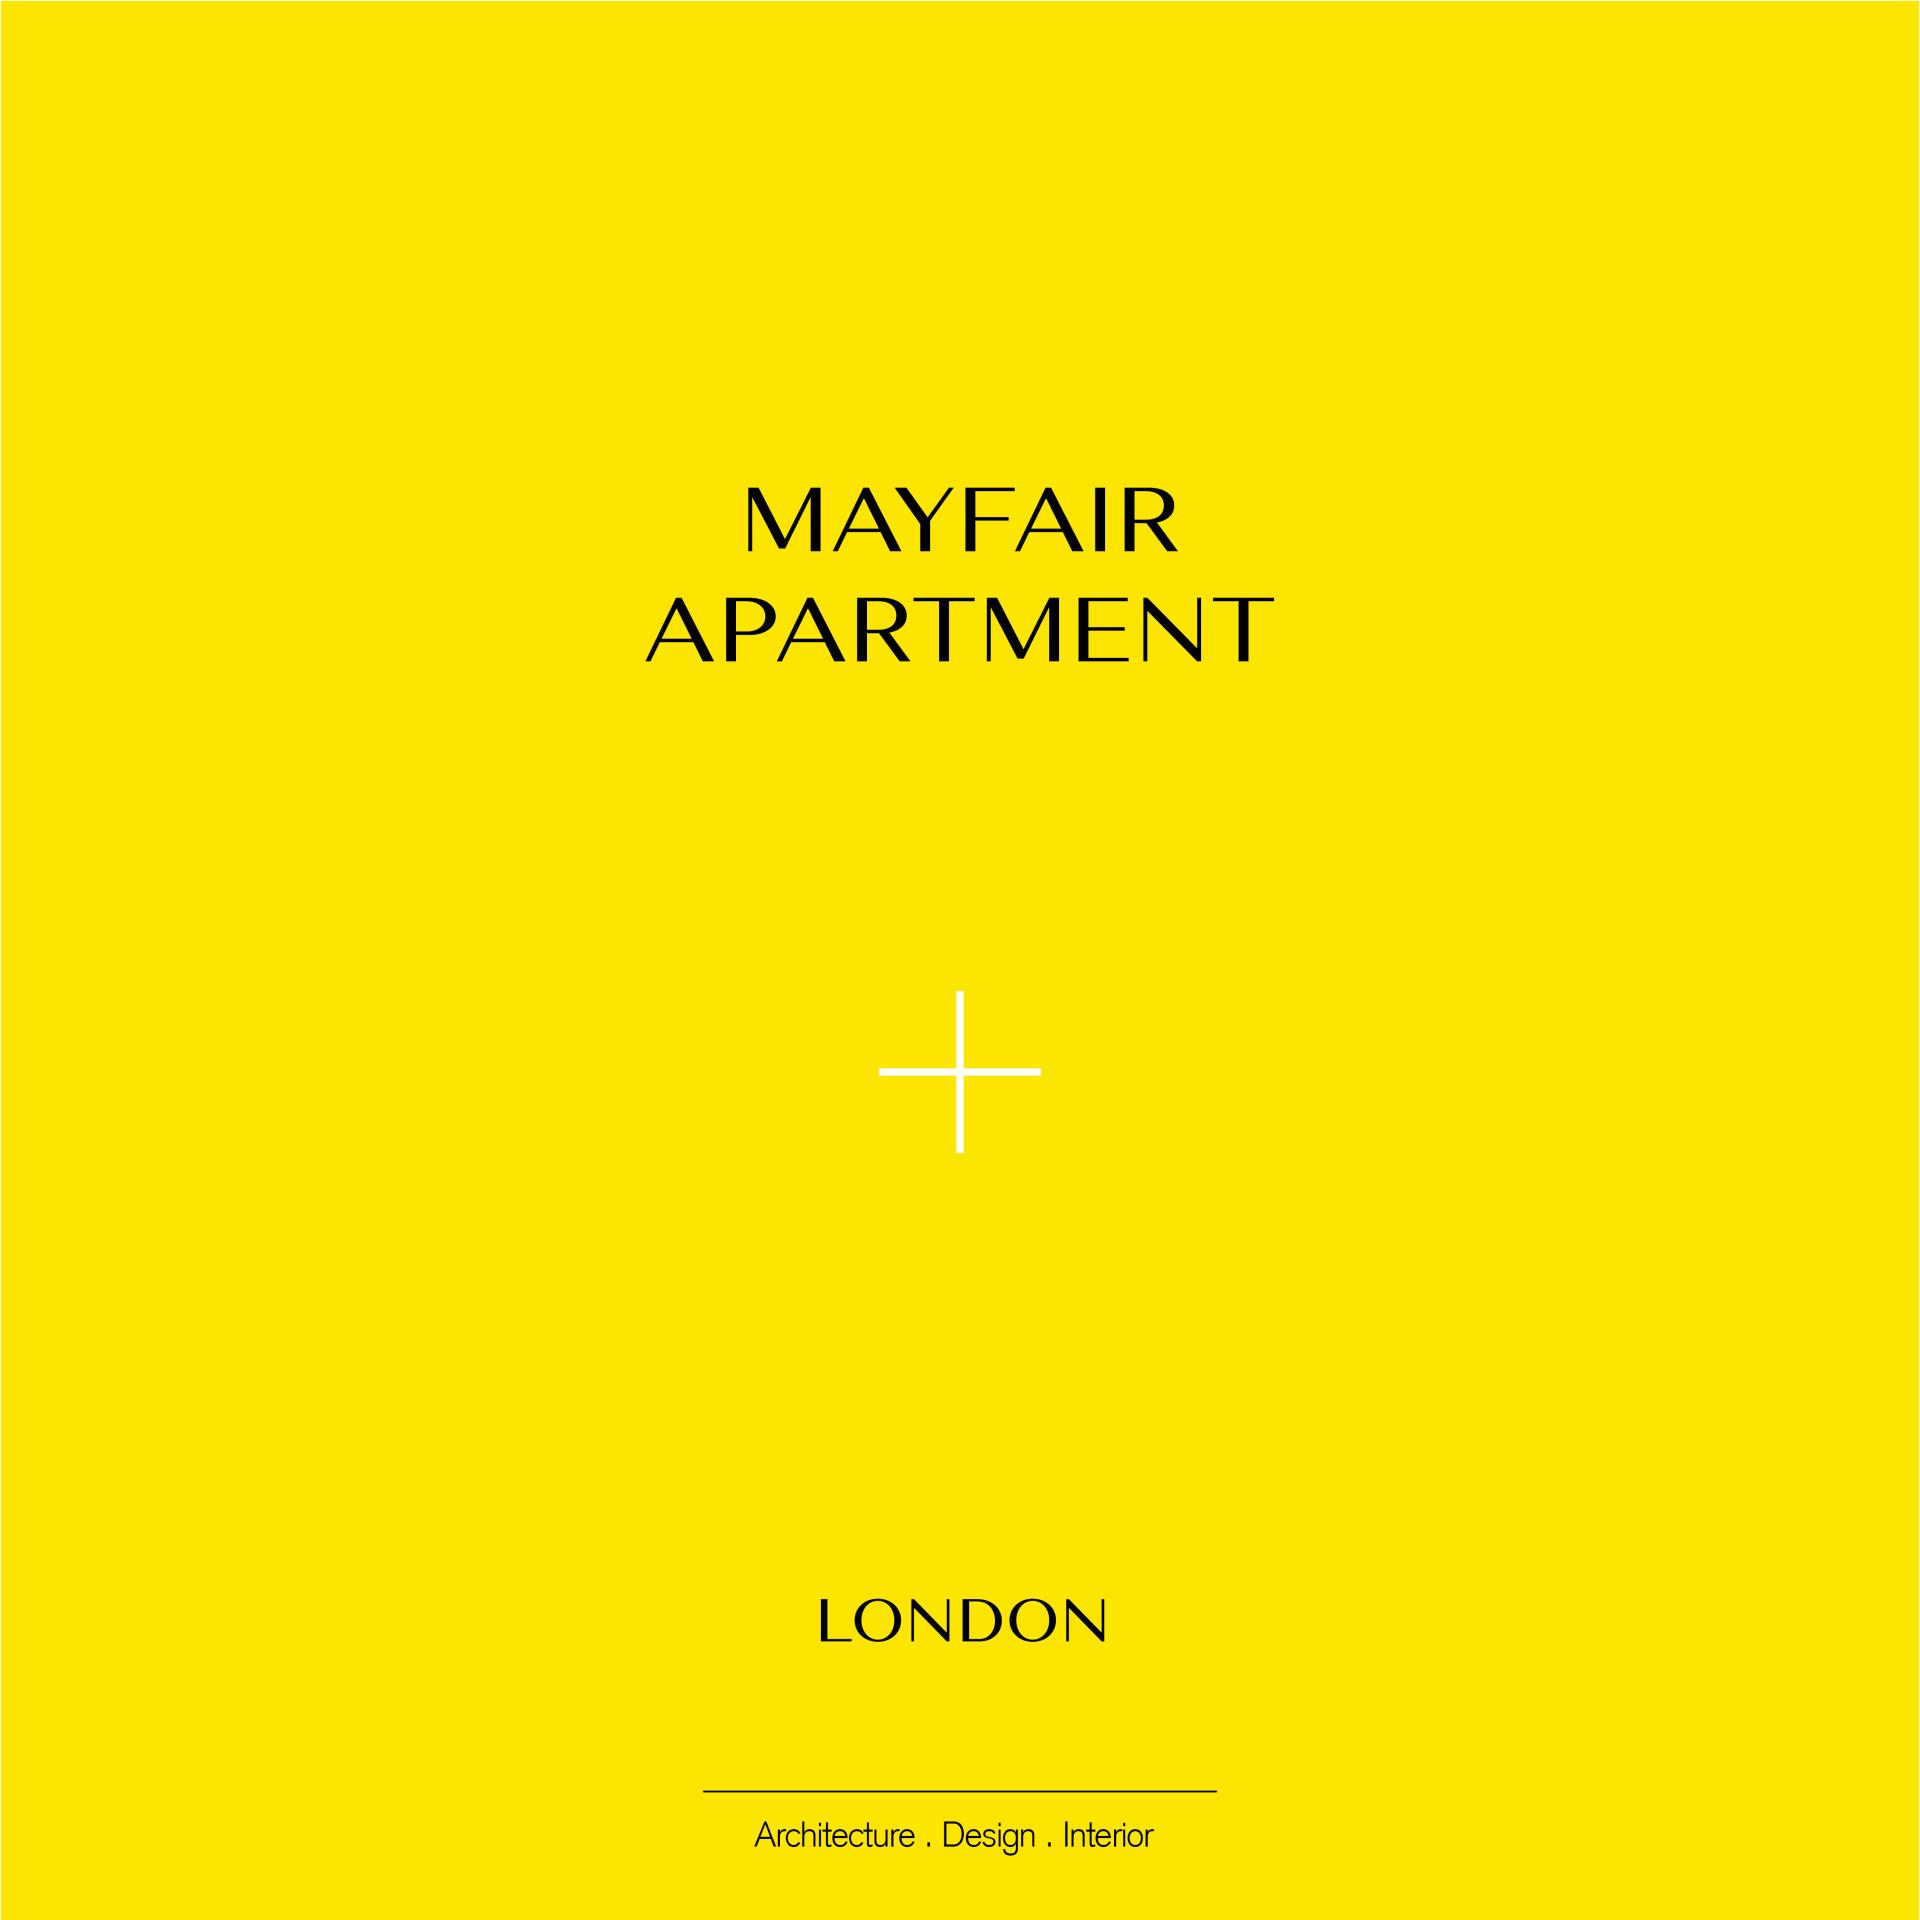 Mayfair Apartment, London